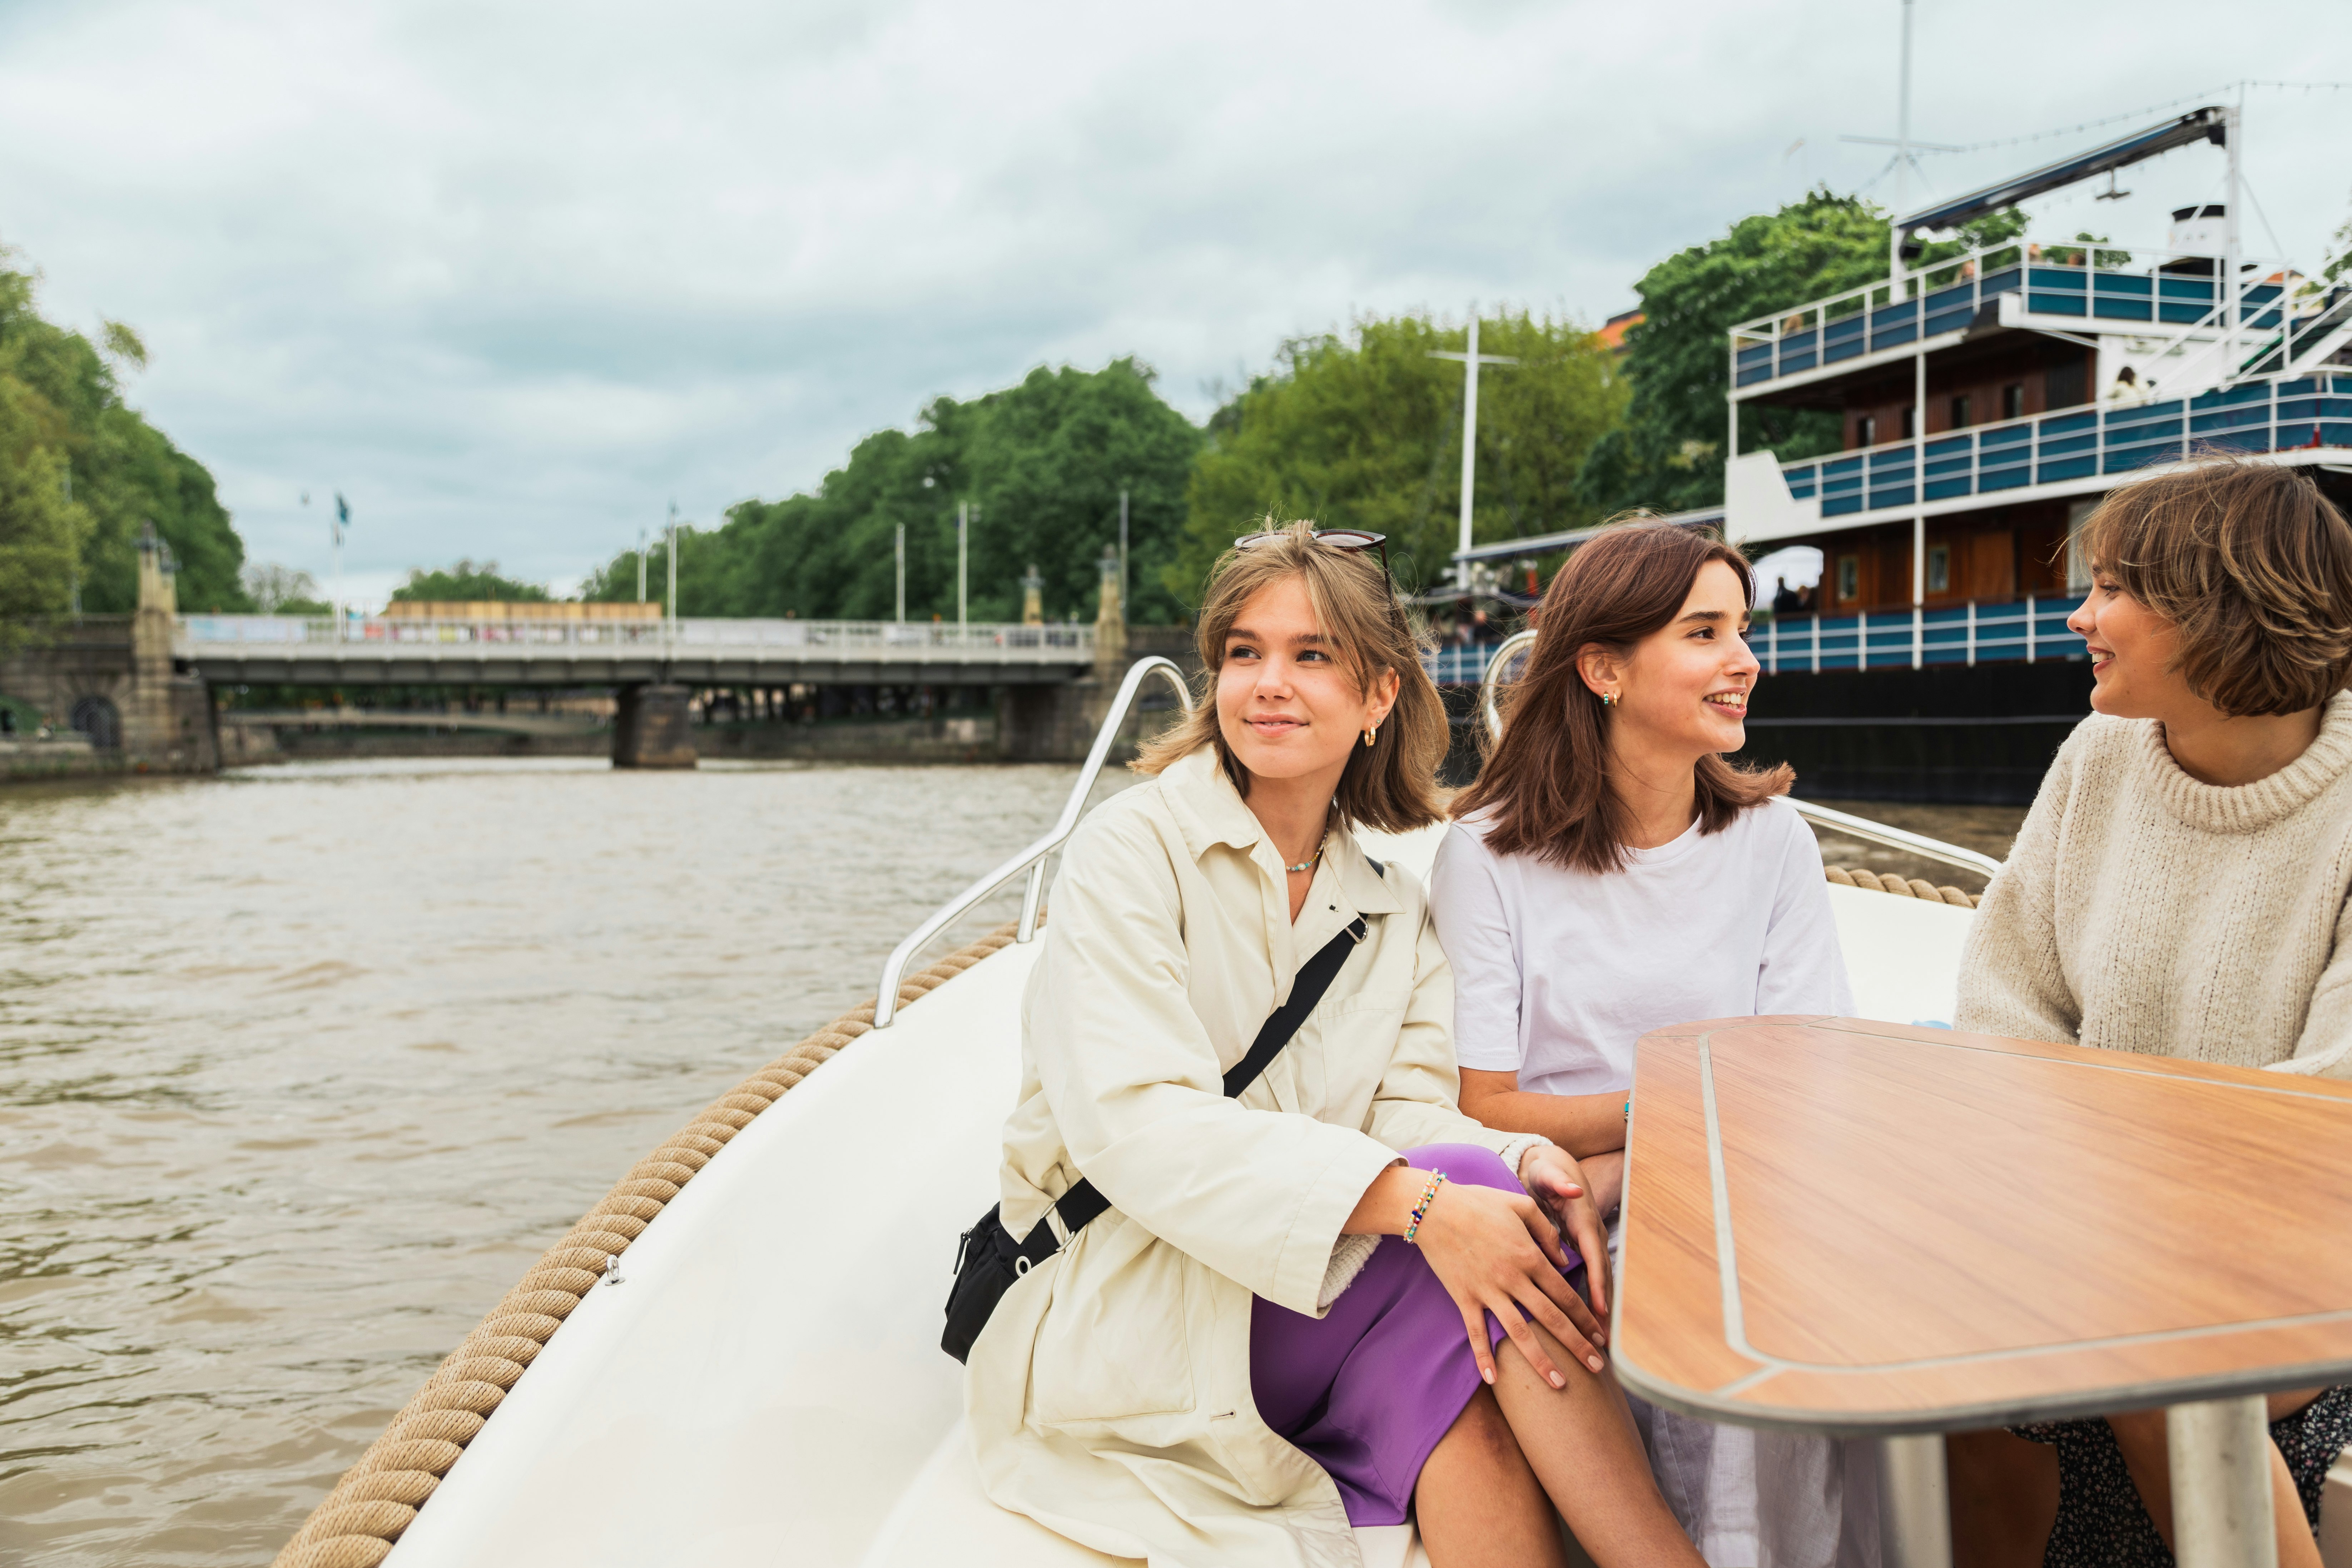 The friends spend time on låna boats in Turku.